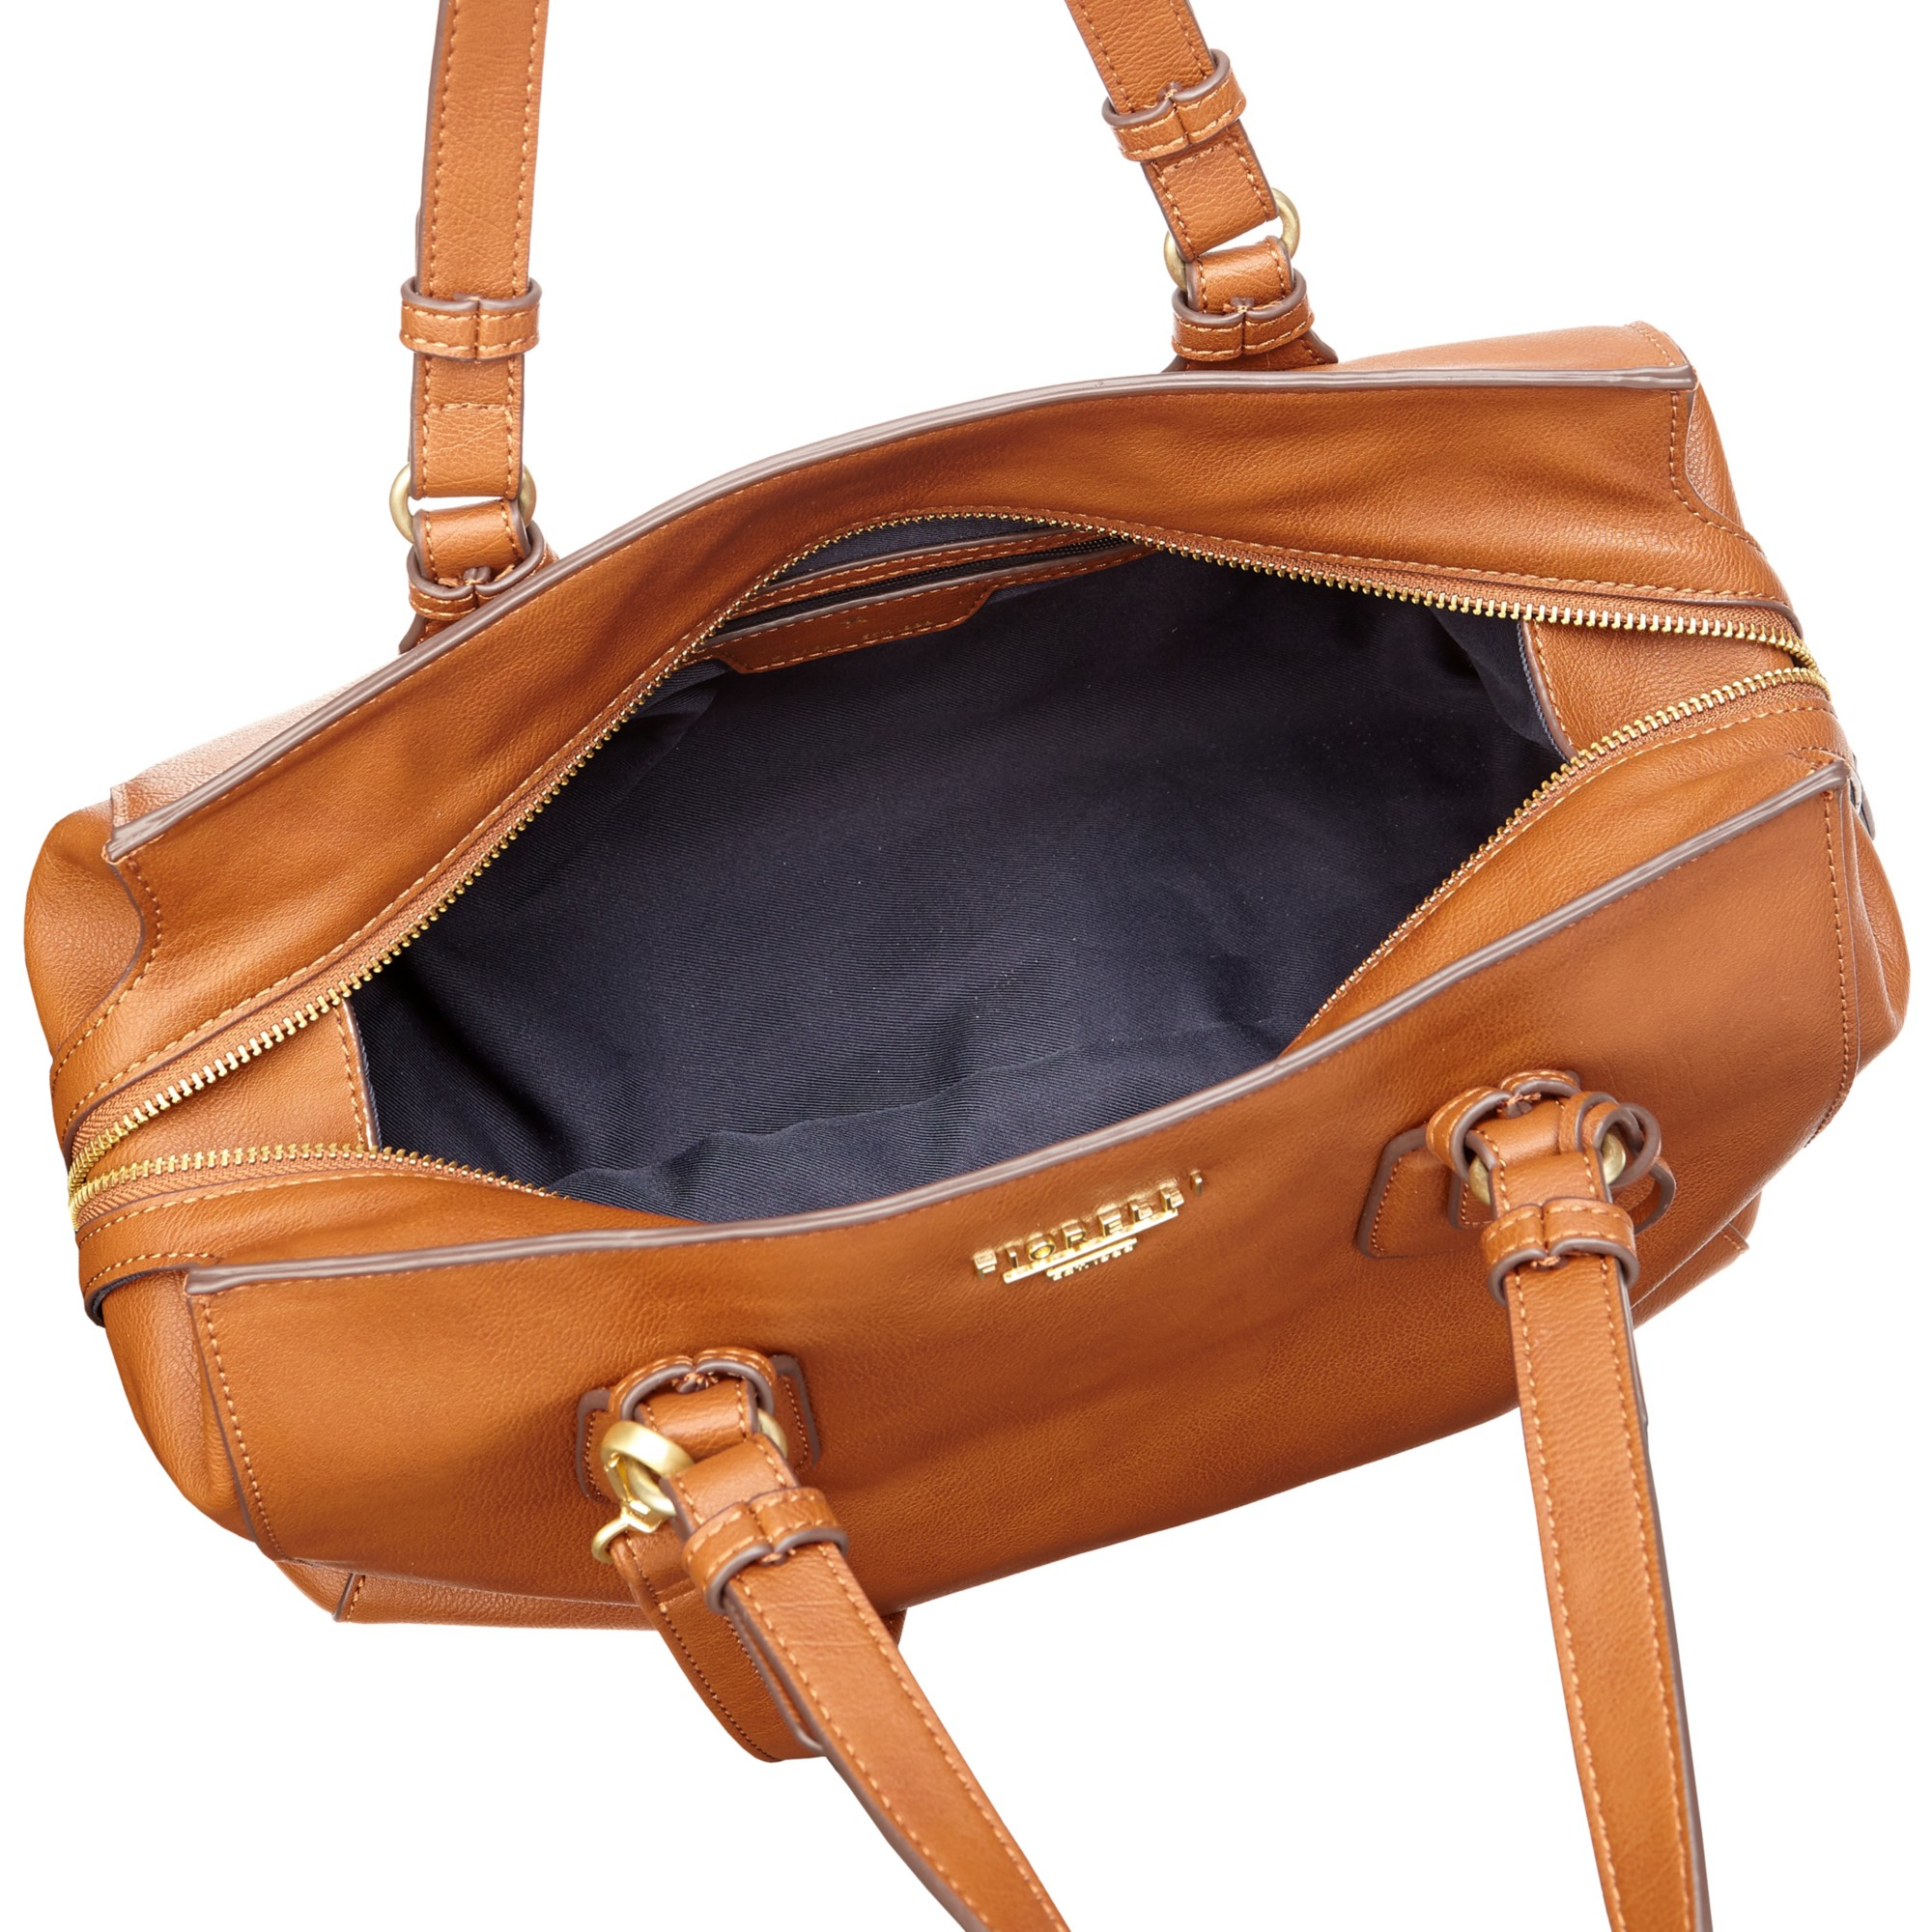 Fiorelli Roxanne East West Shoulder Bag in Brown - Lyst